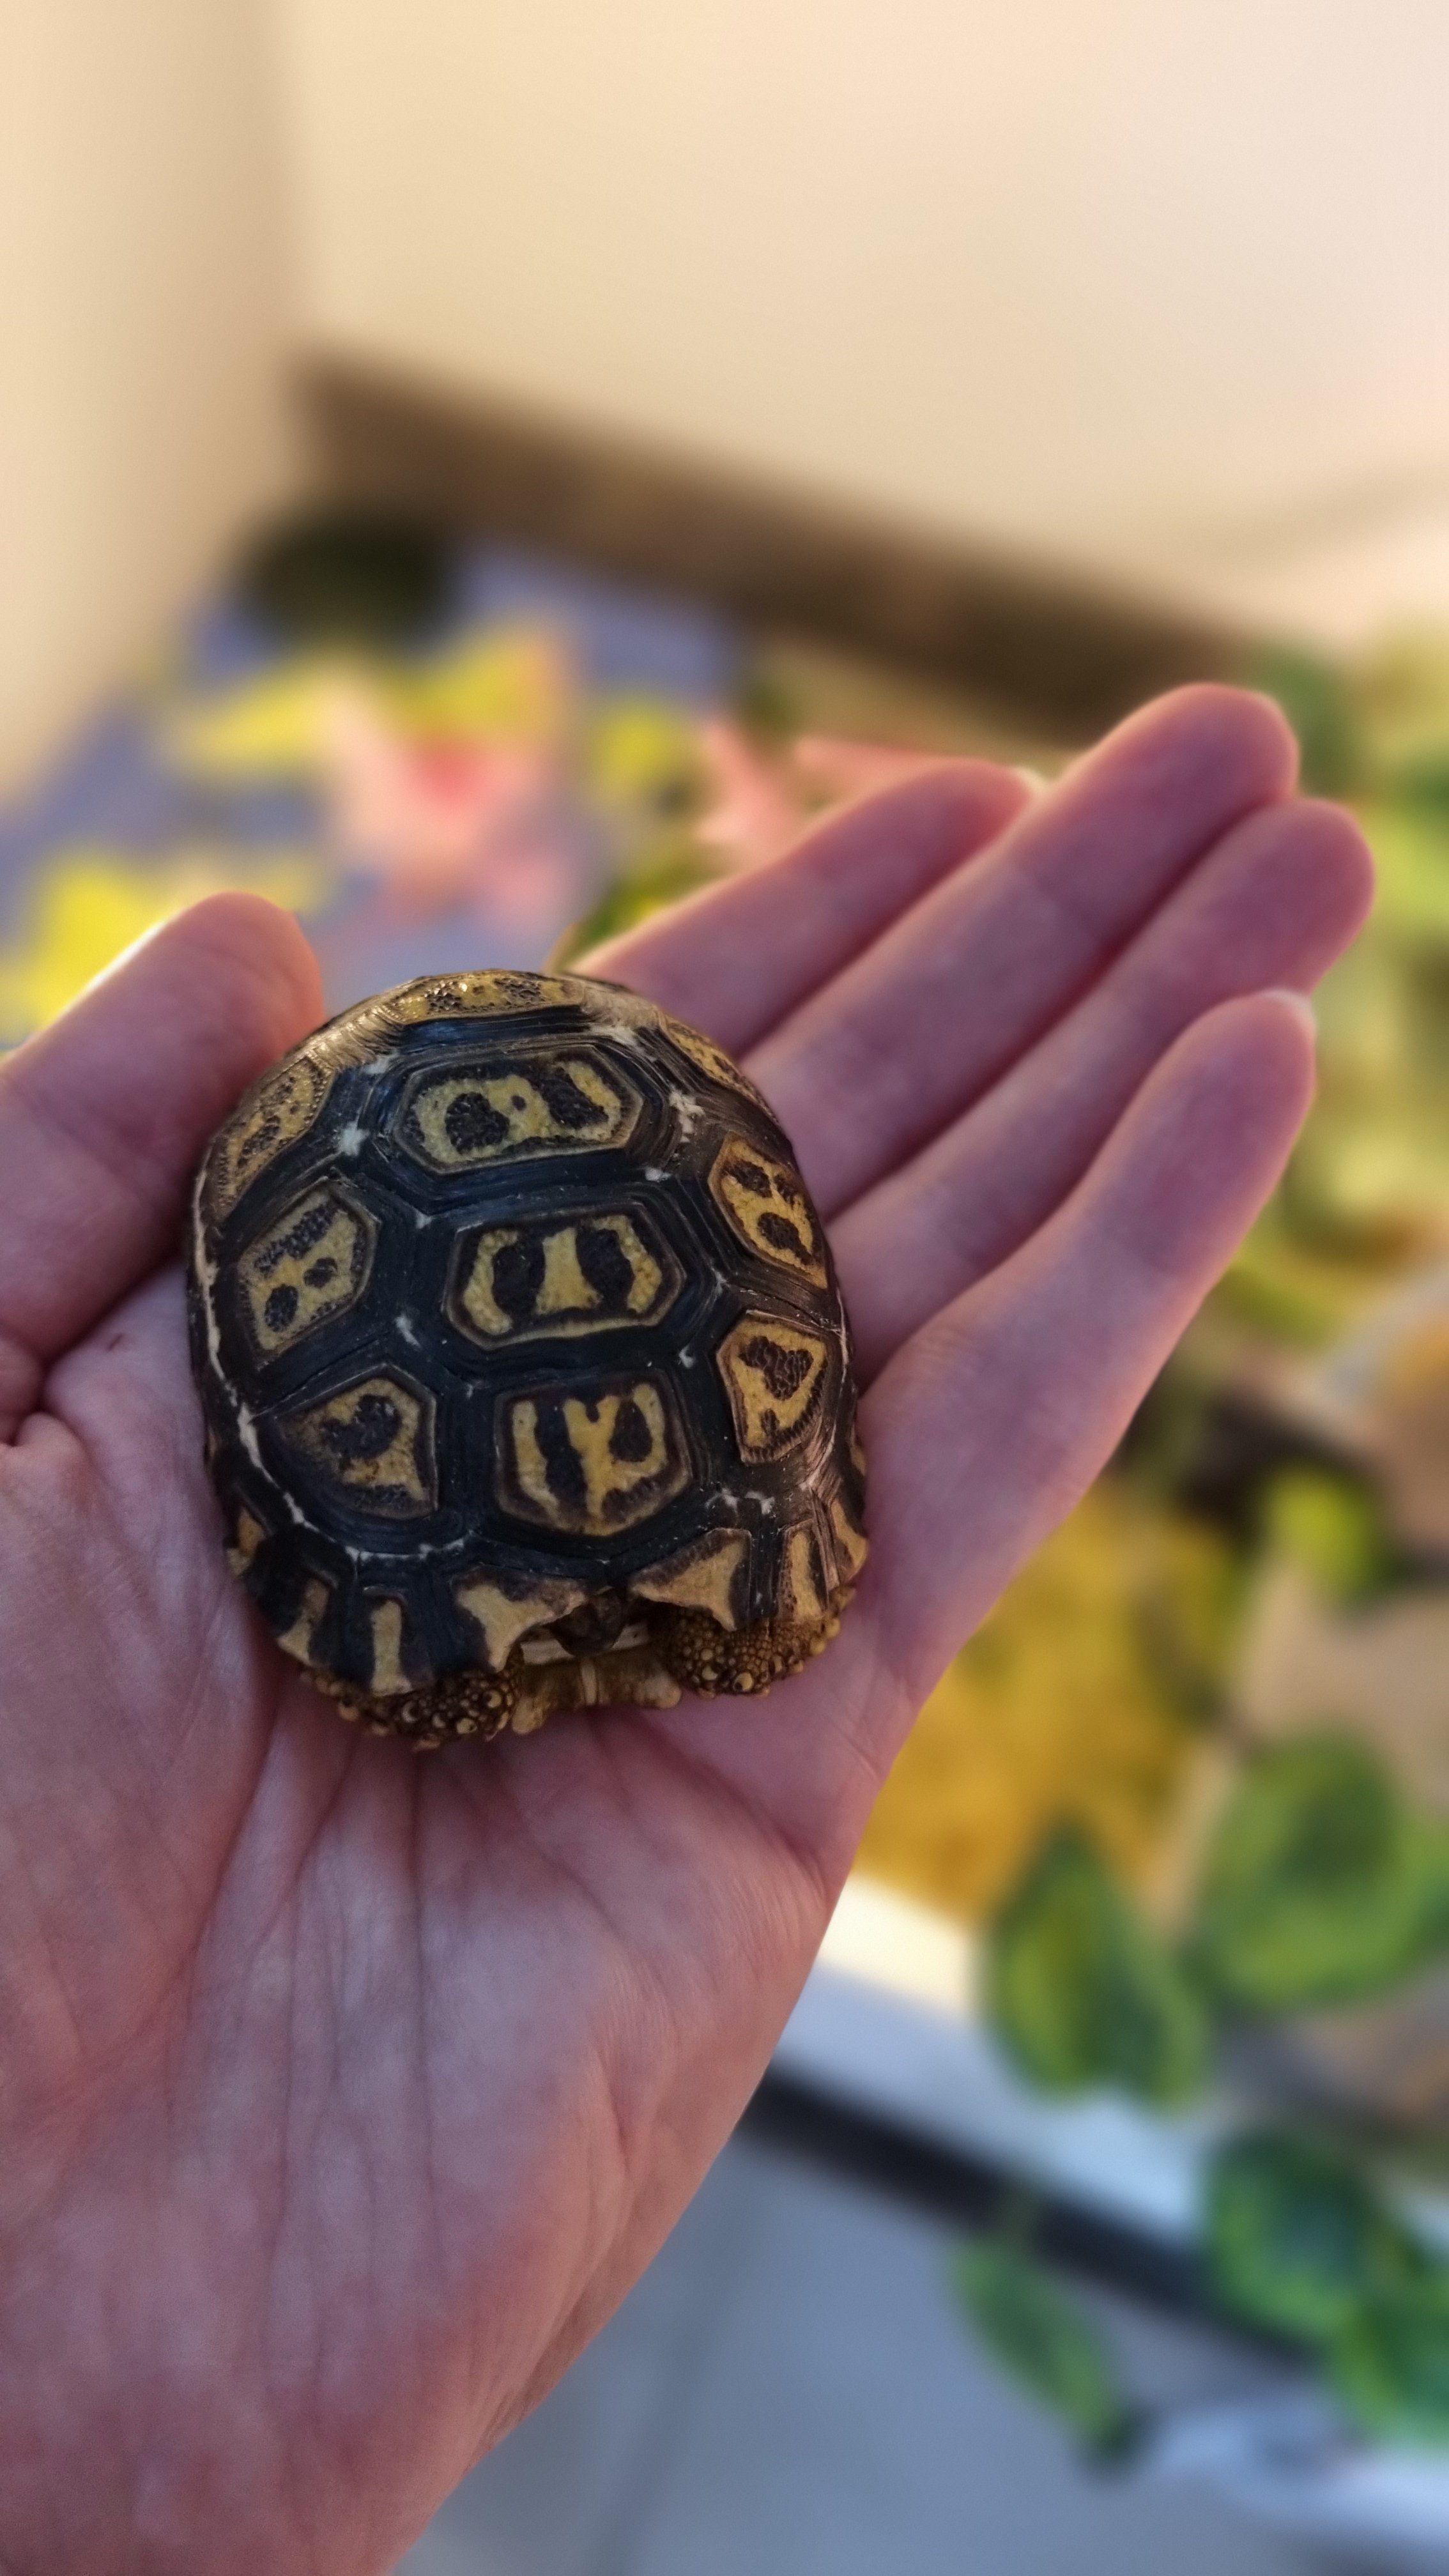 Baby leopard tortoise